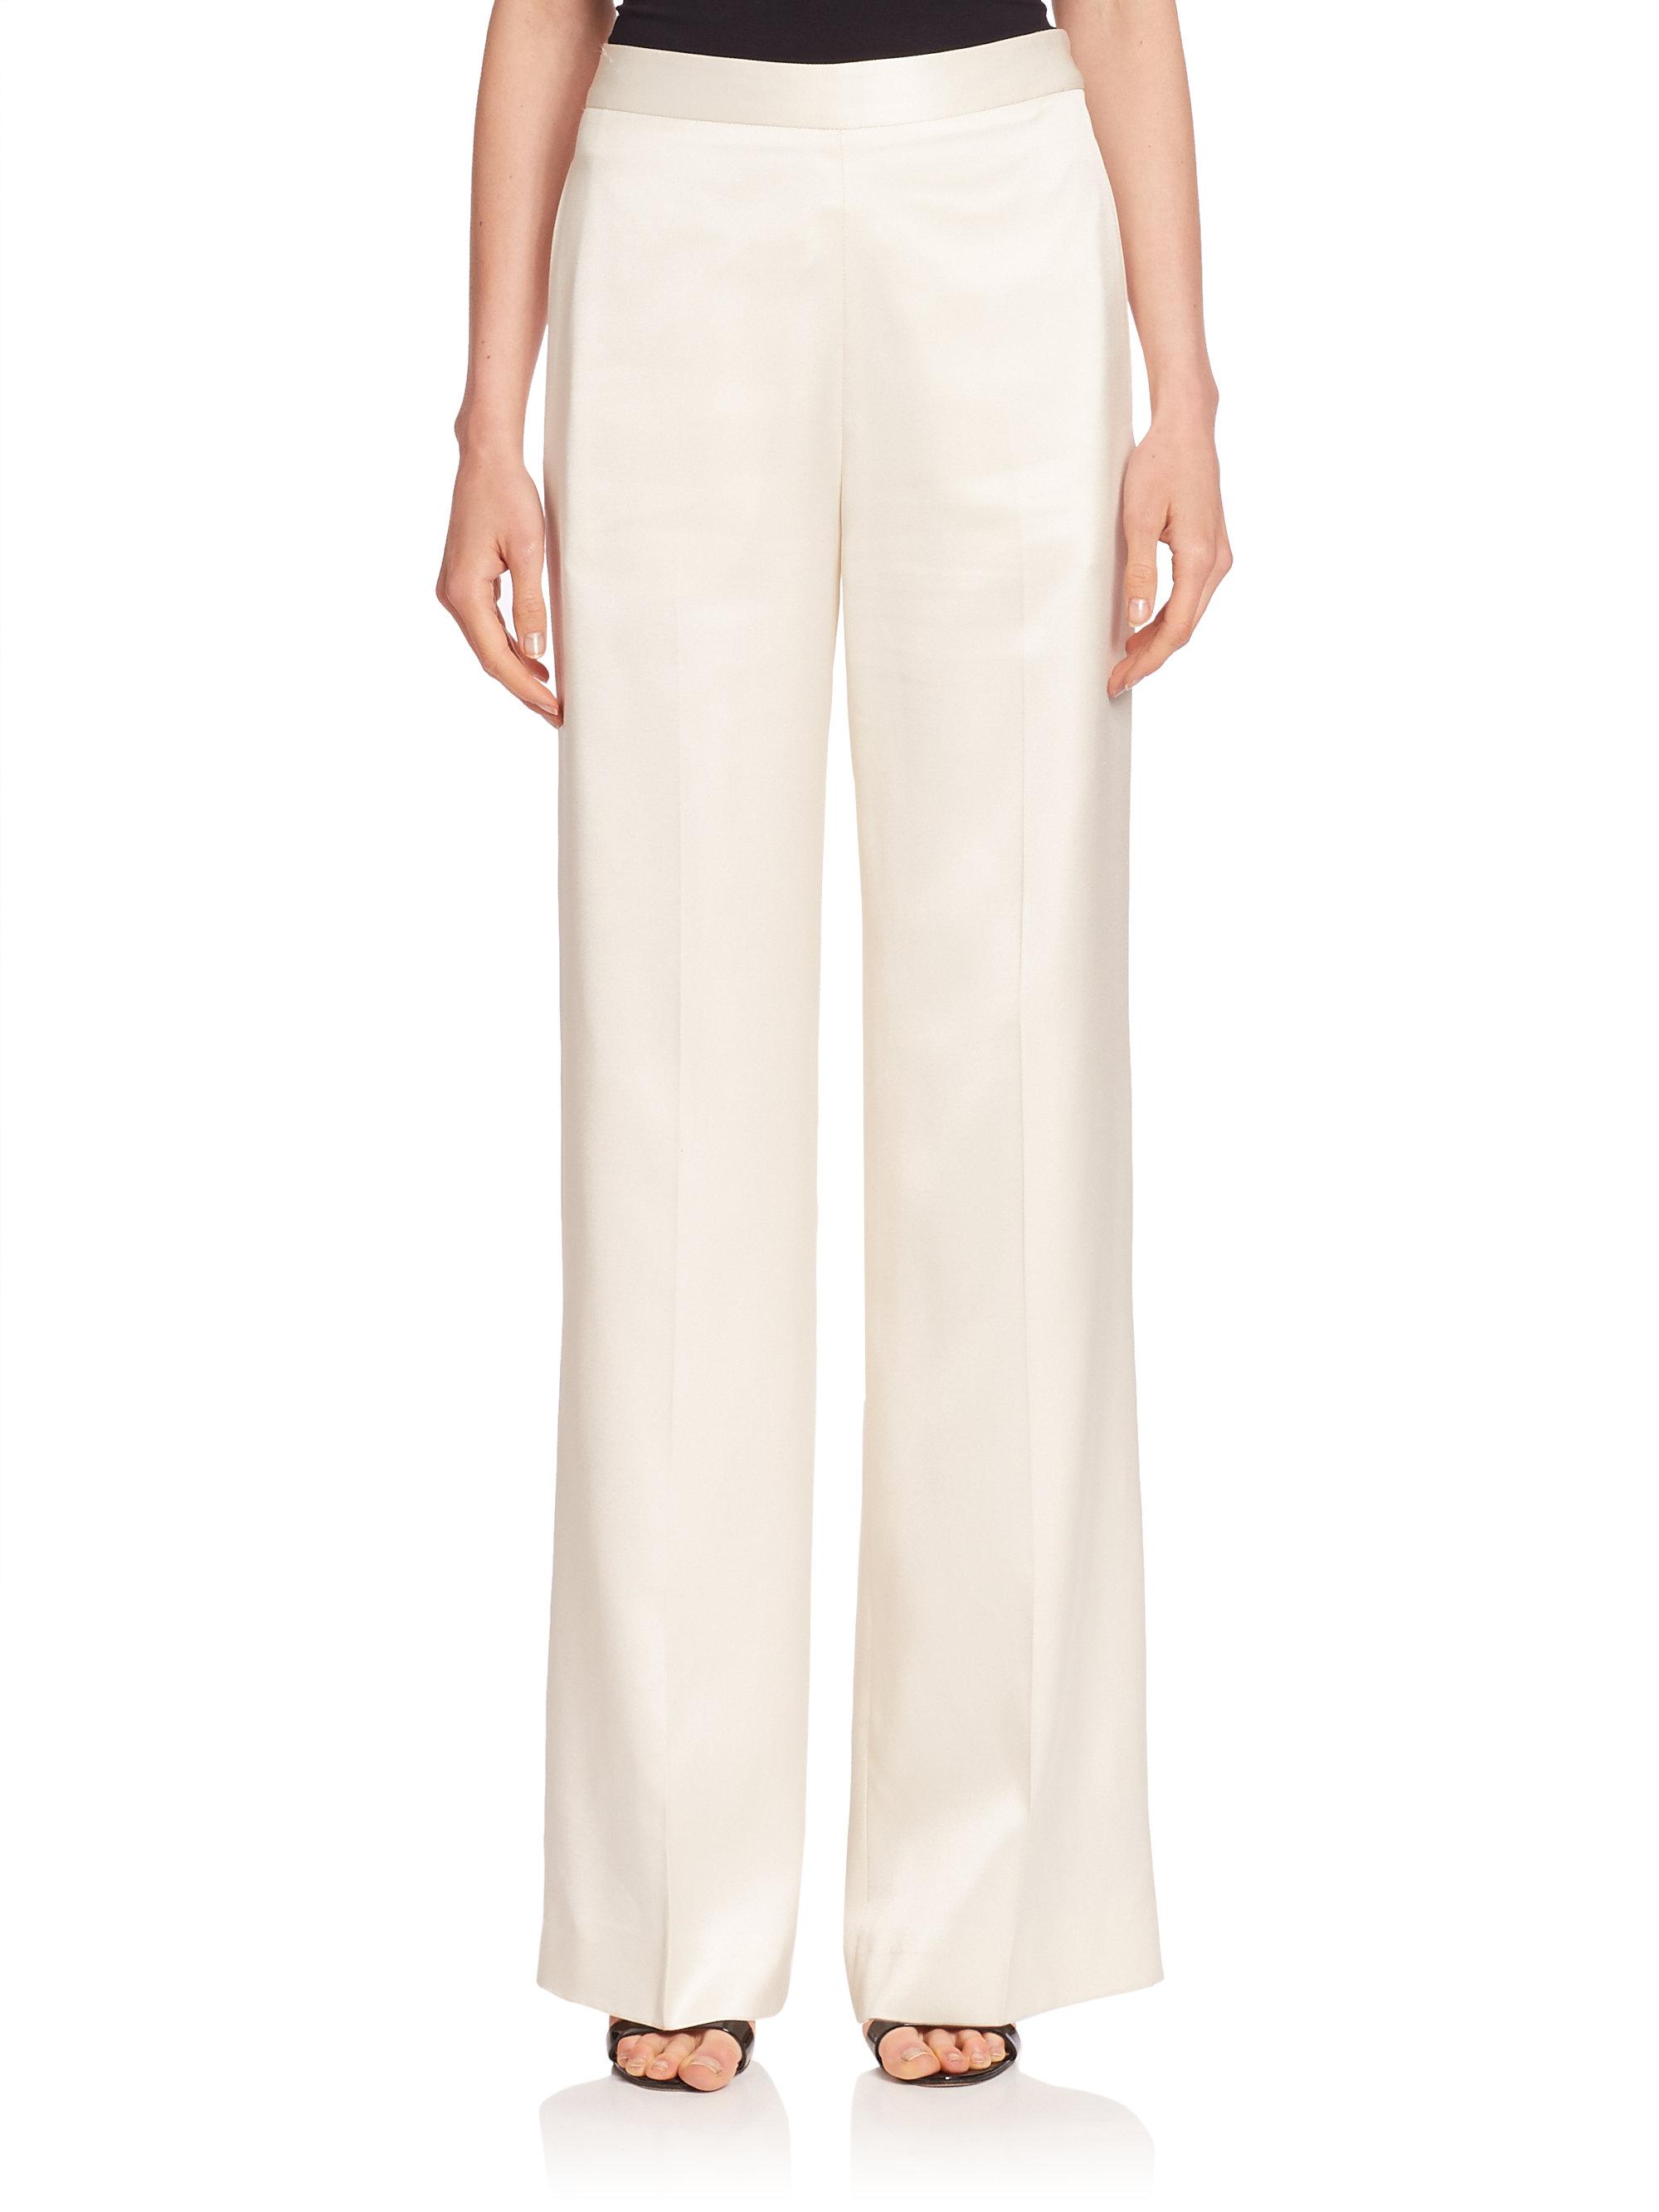 Victoria Beckham Silk Wide-leg Pants in Ivory (White) - Lyst